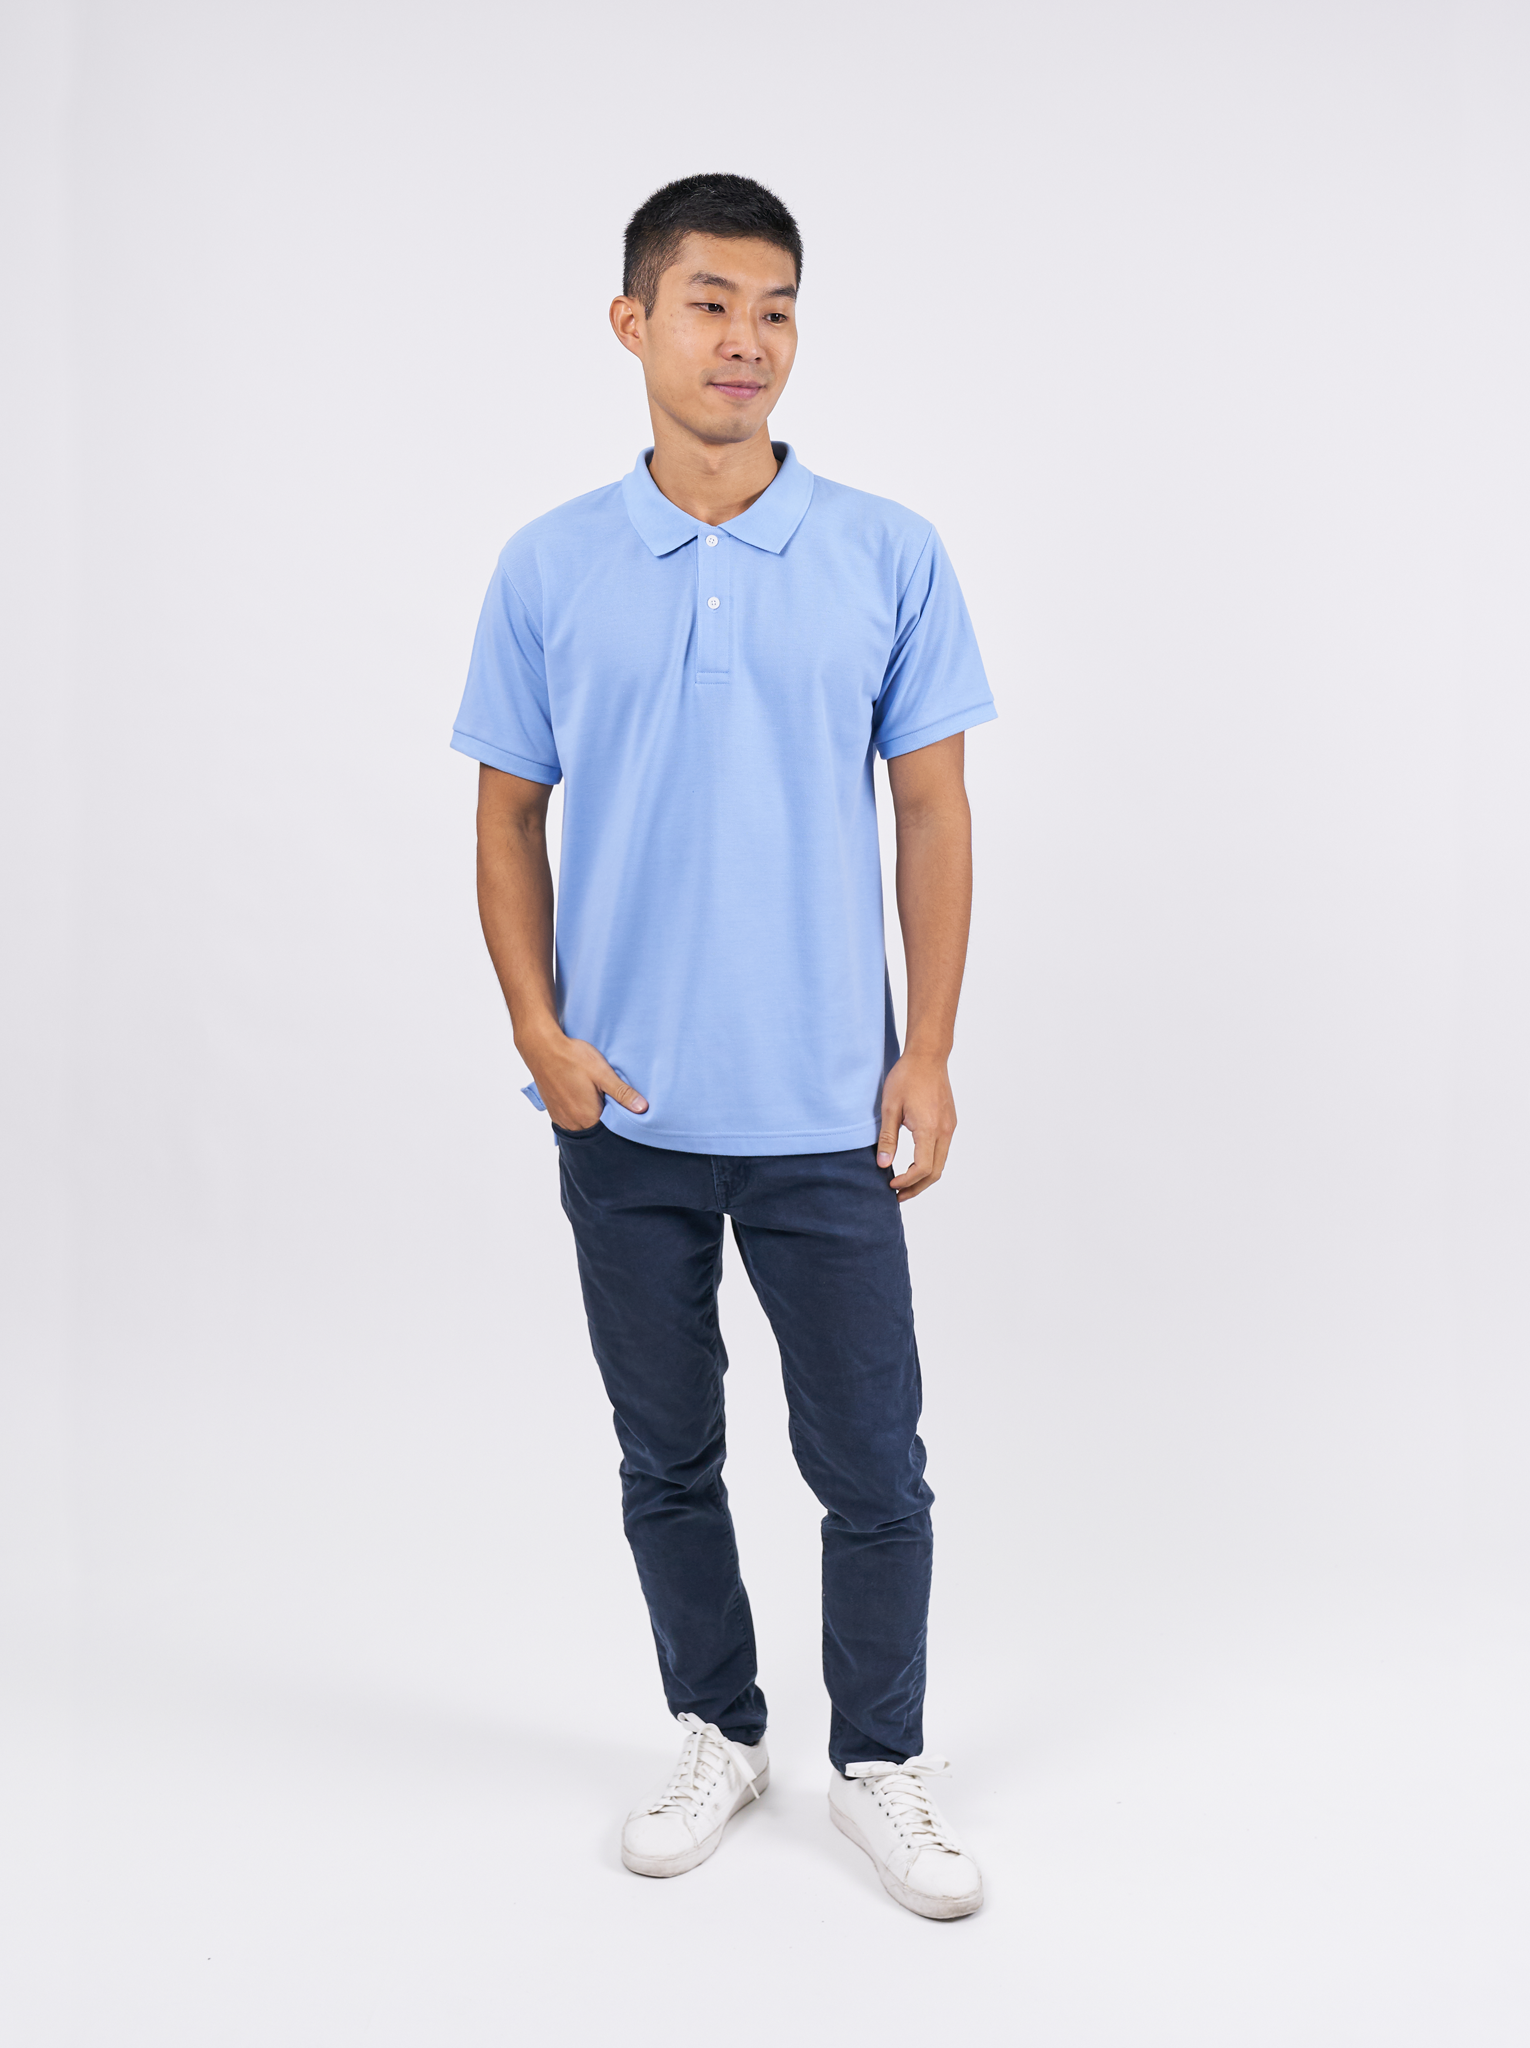 Polo Shirt เสื้อโปโล (Sky Blue, สีฟ้า)(Unisex)